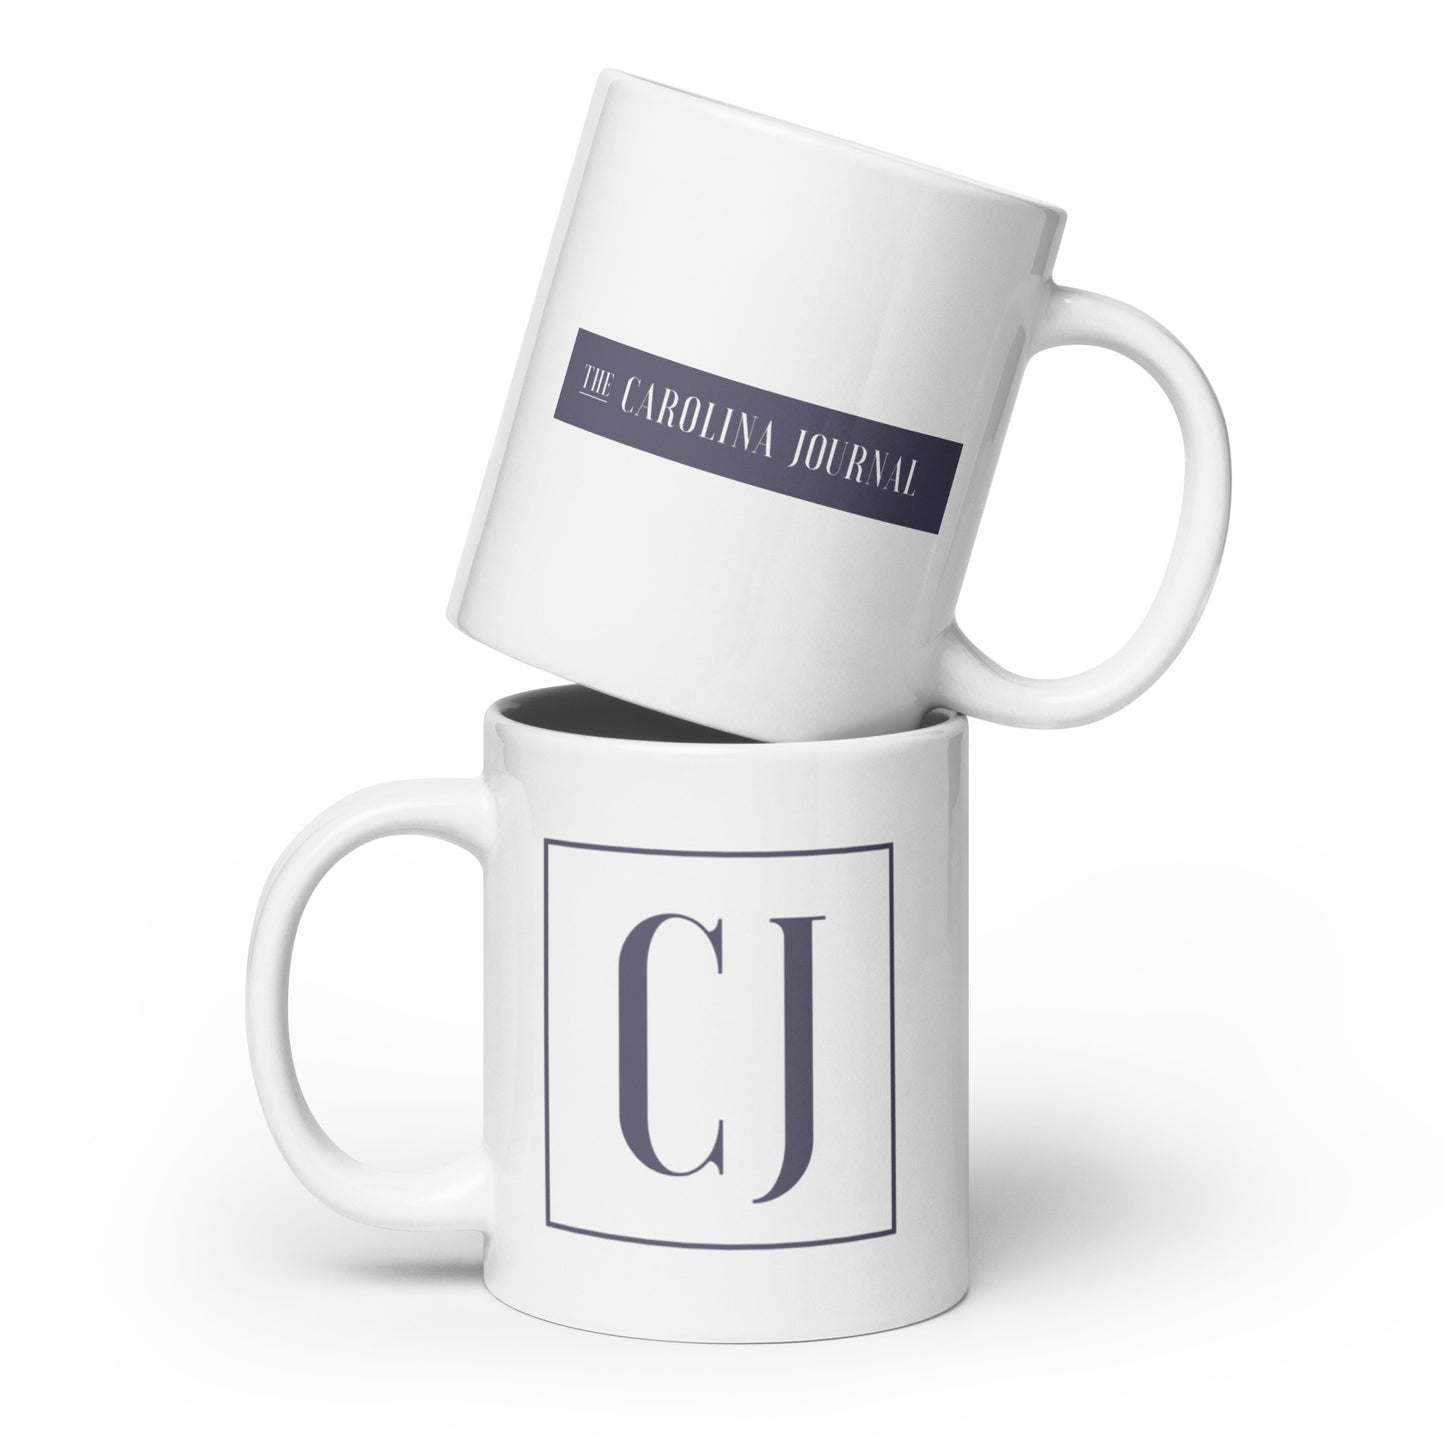 Carolina Journal White Glossy Mug